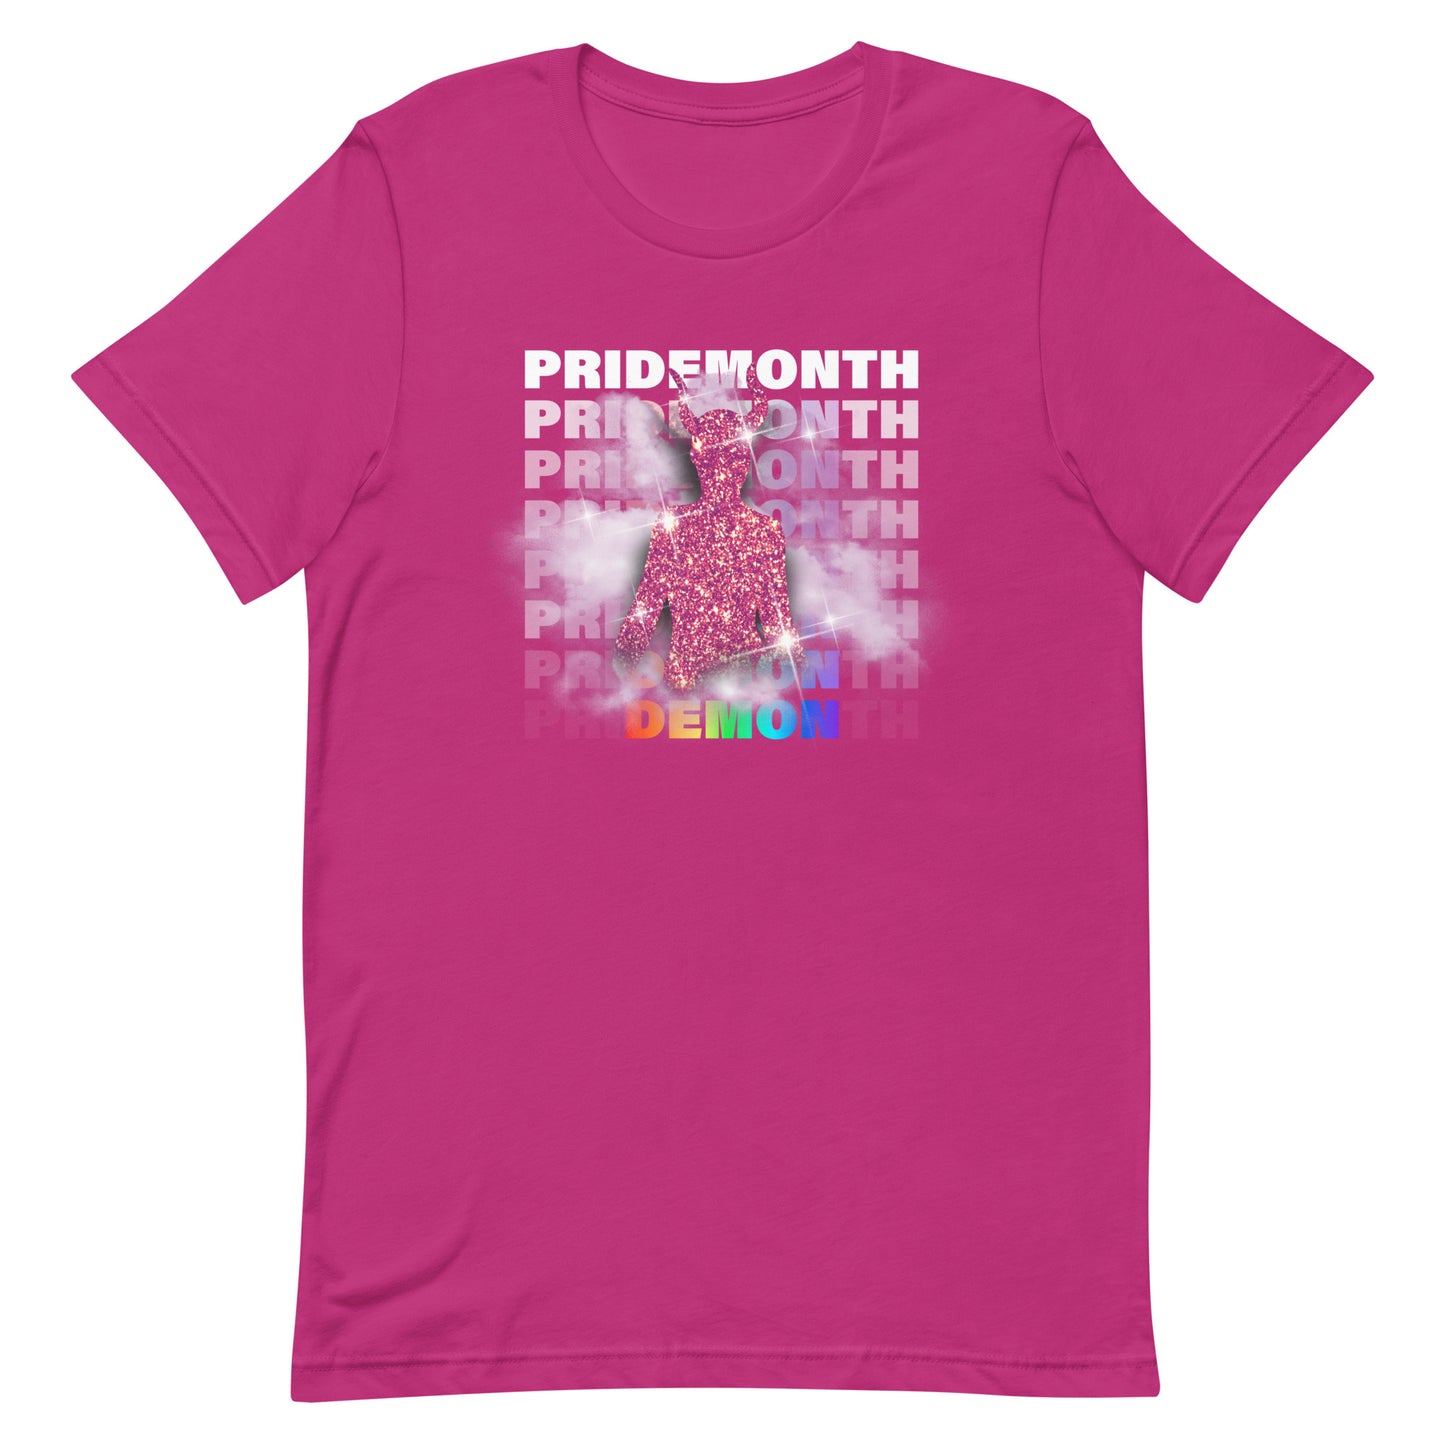 PRIDEMONTH (DEMON) Unisex t-shirt